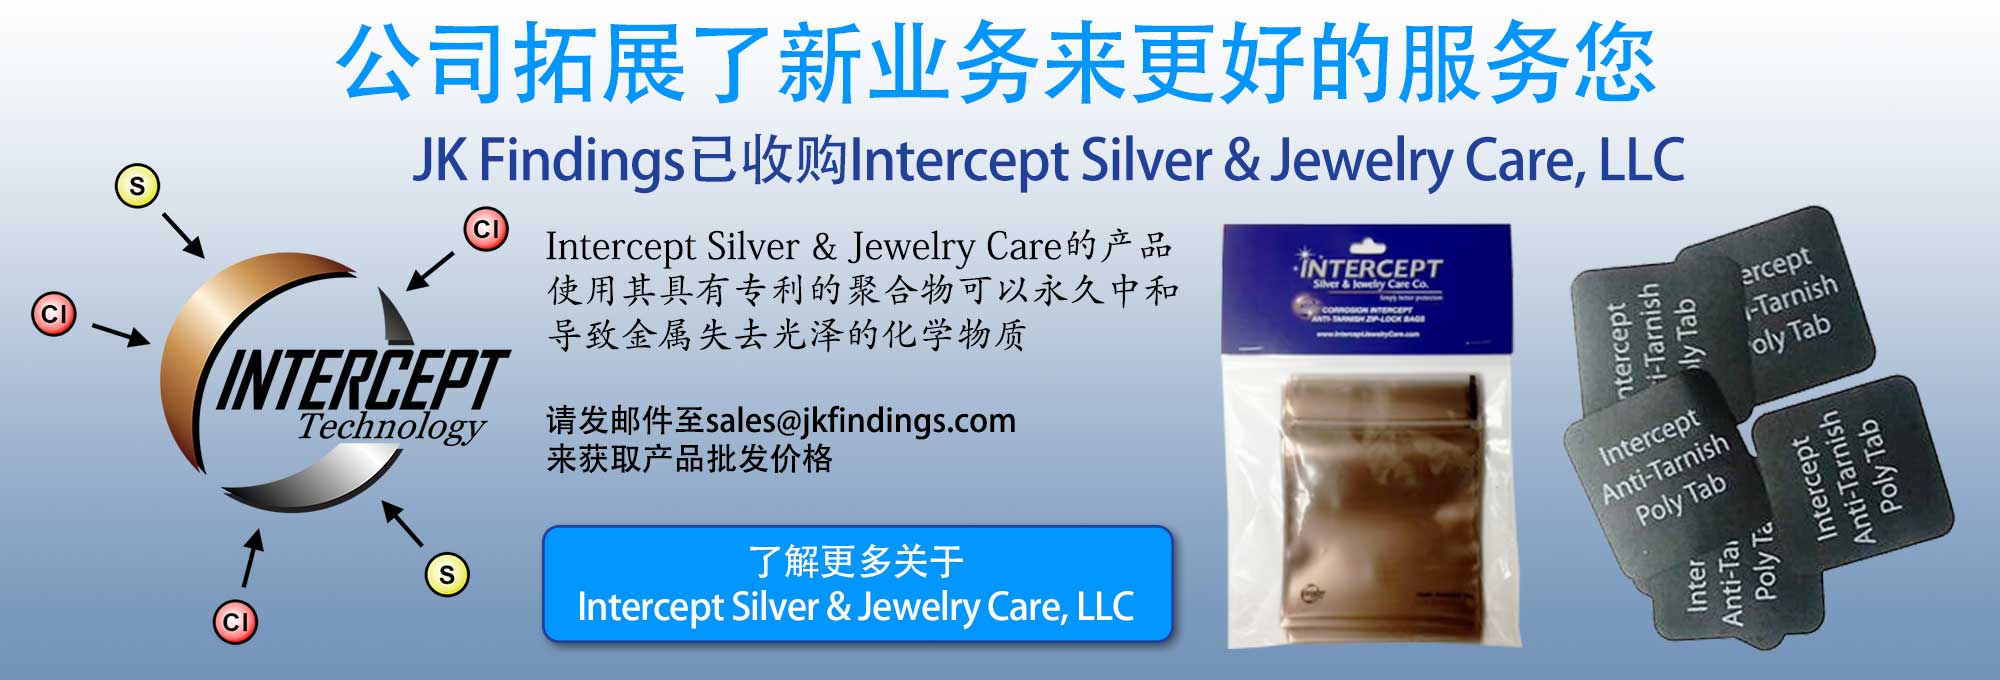 JK Findings已收购Intercept Silver & Jewelry Care, LLC